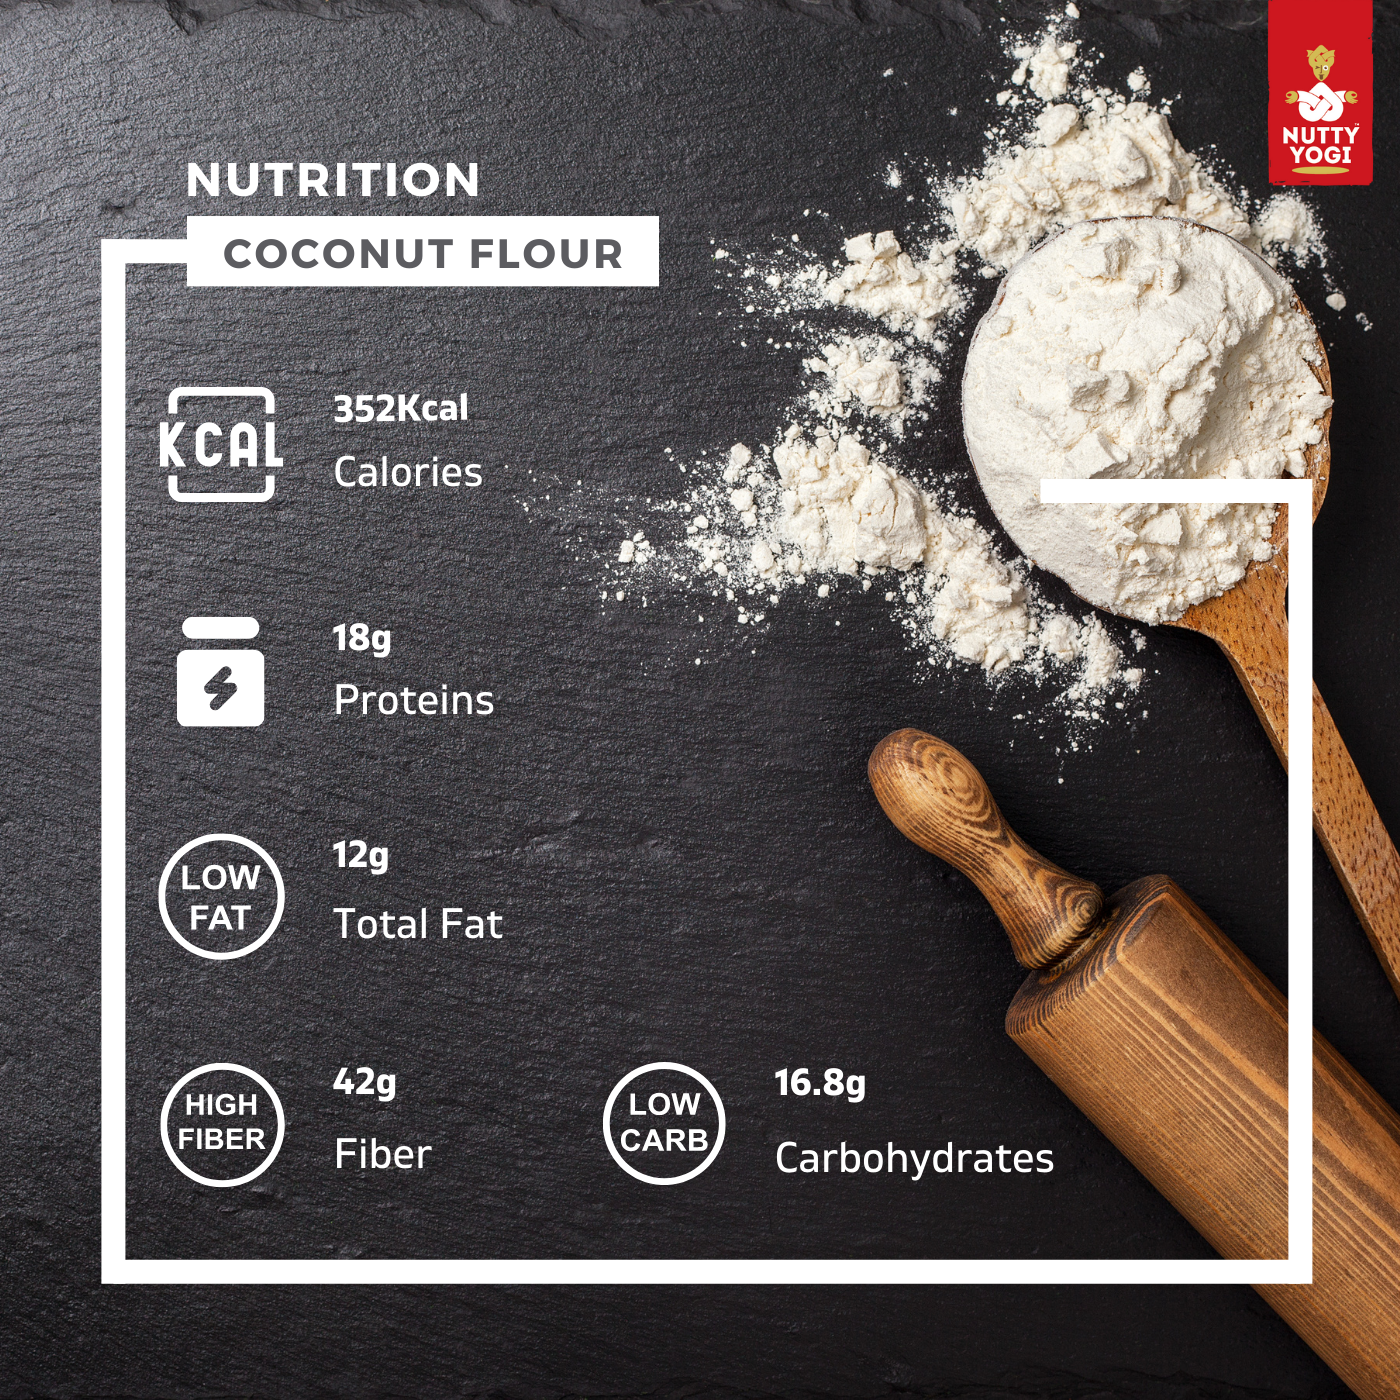 Nutty Yogi Gluten Free Coconut Flour , Atta Grain Free, Delicious, Healthy Alternative, Goodness of Coconut, Good Fat, Low Carb, Keto Friendly -200 gm